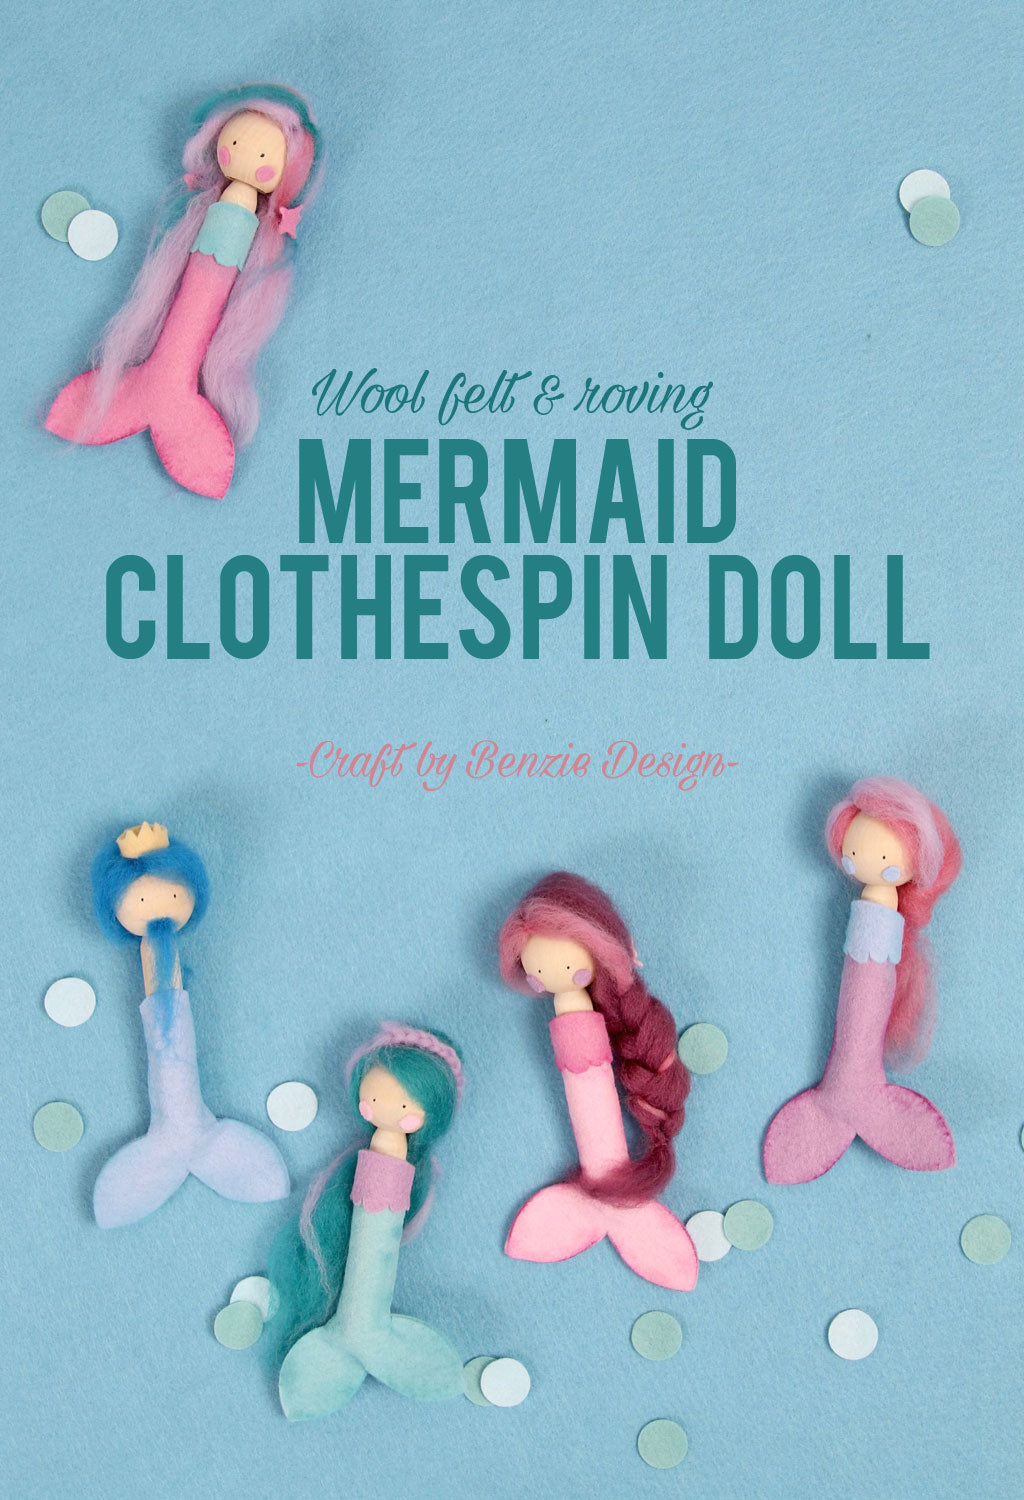 Mermaid clothespin doll